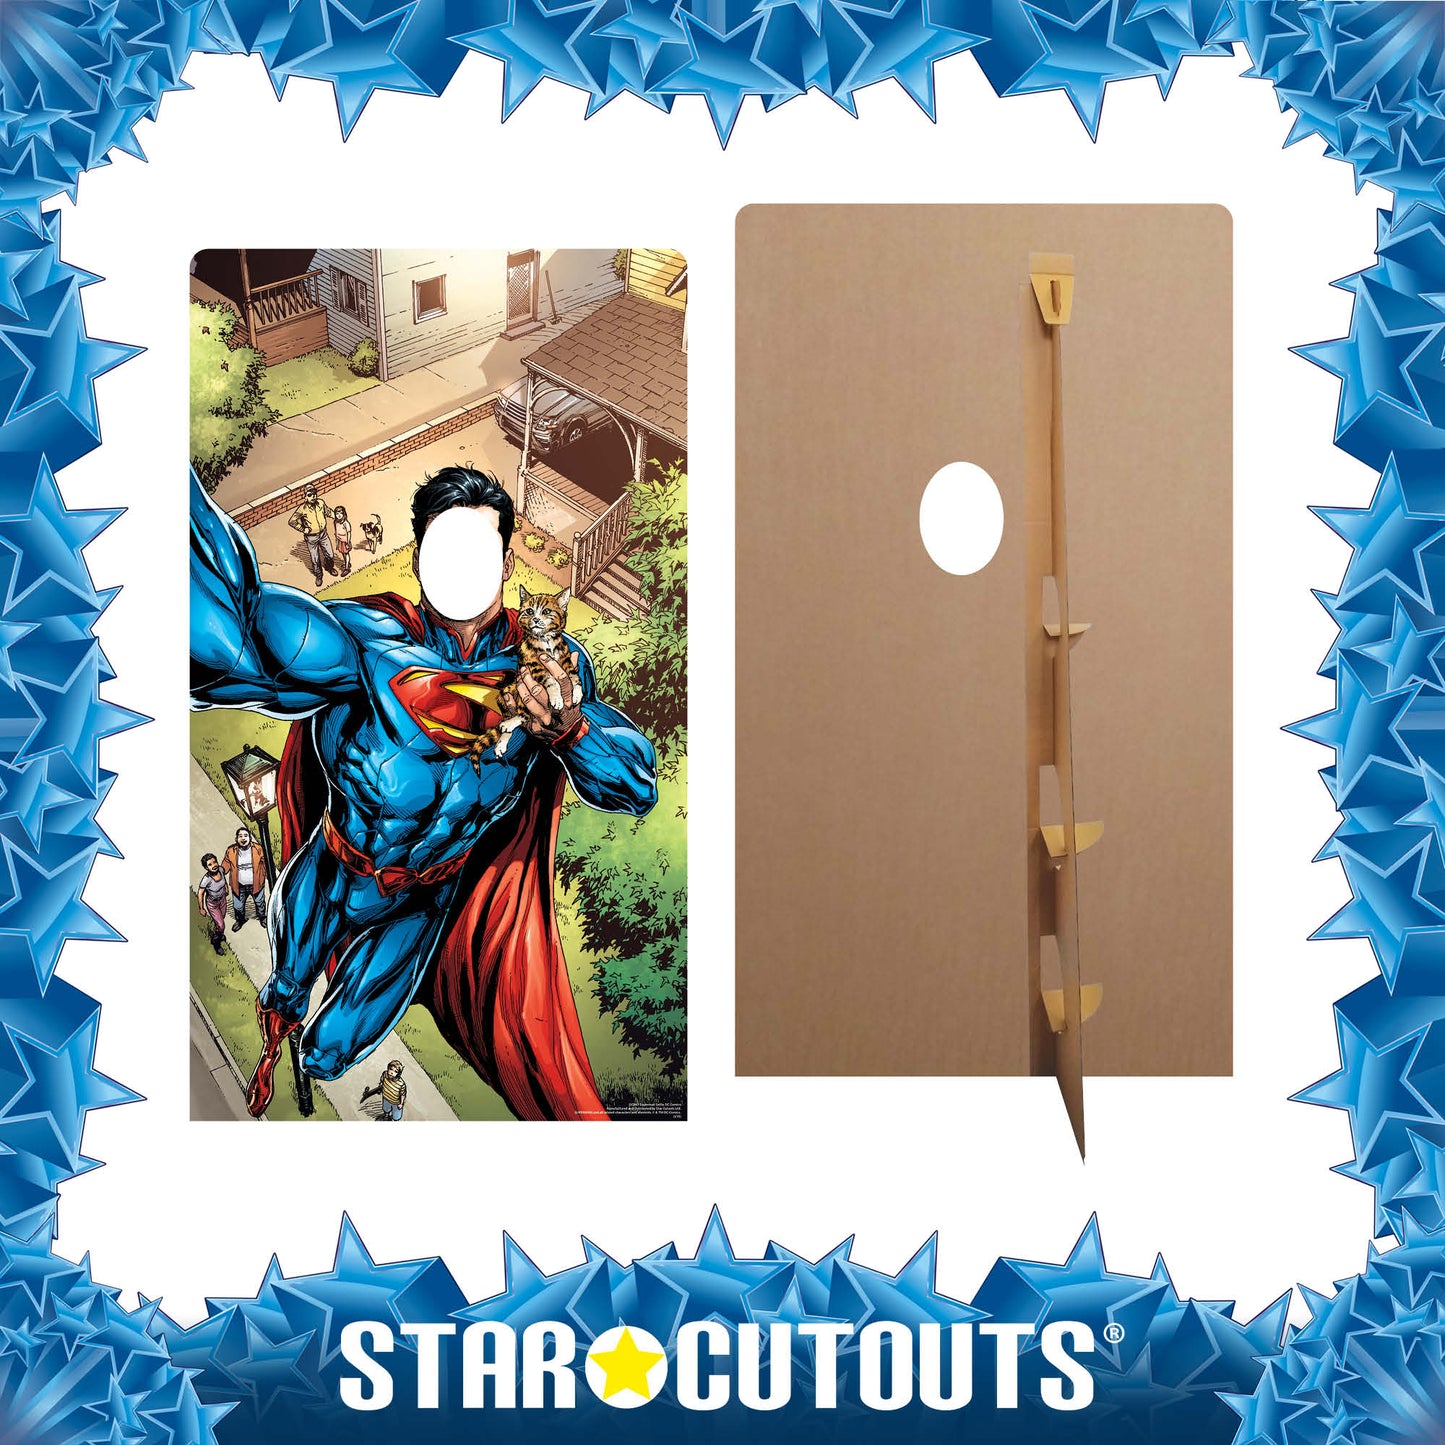 Superman Selfie StandIn DC Cardboard Cutout